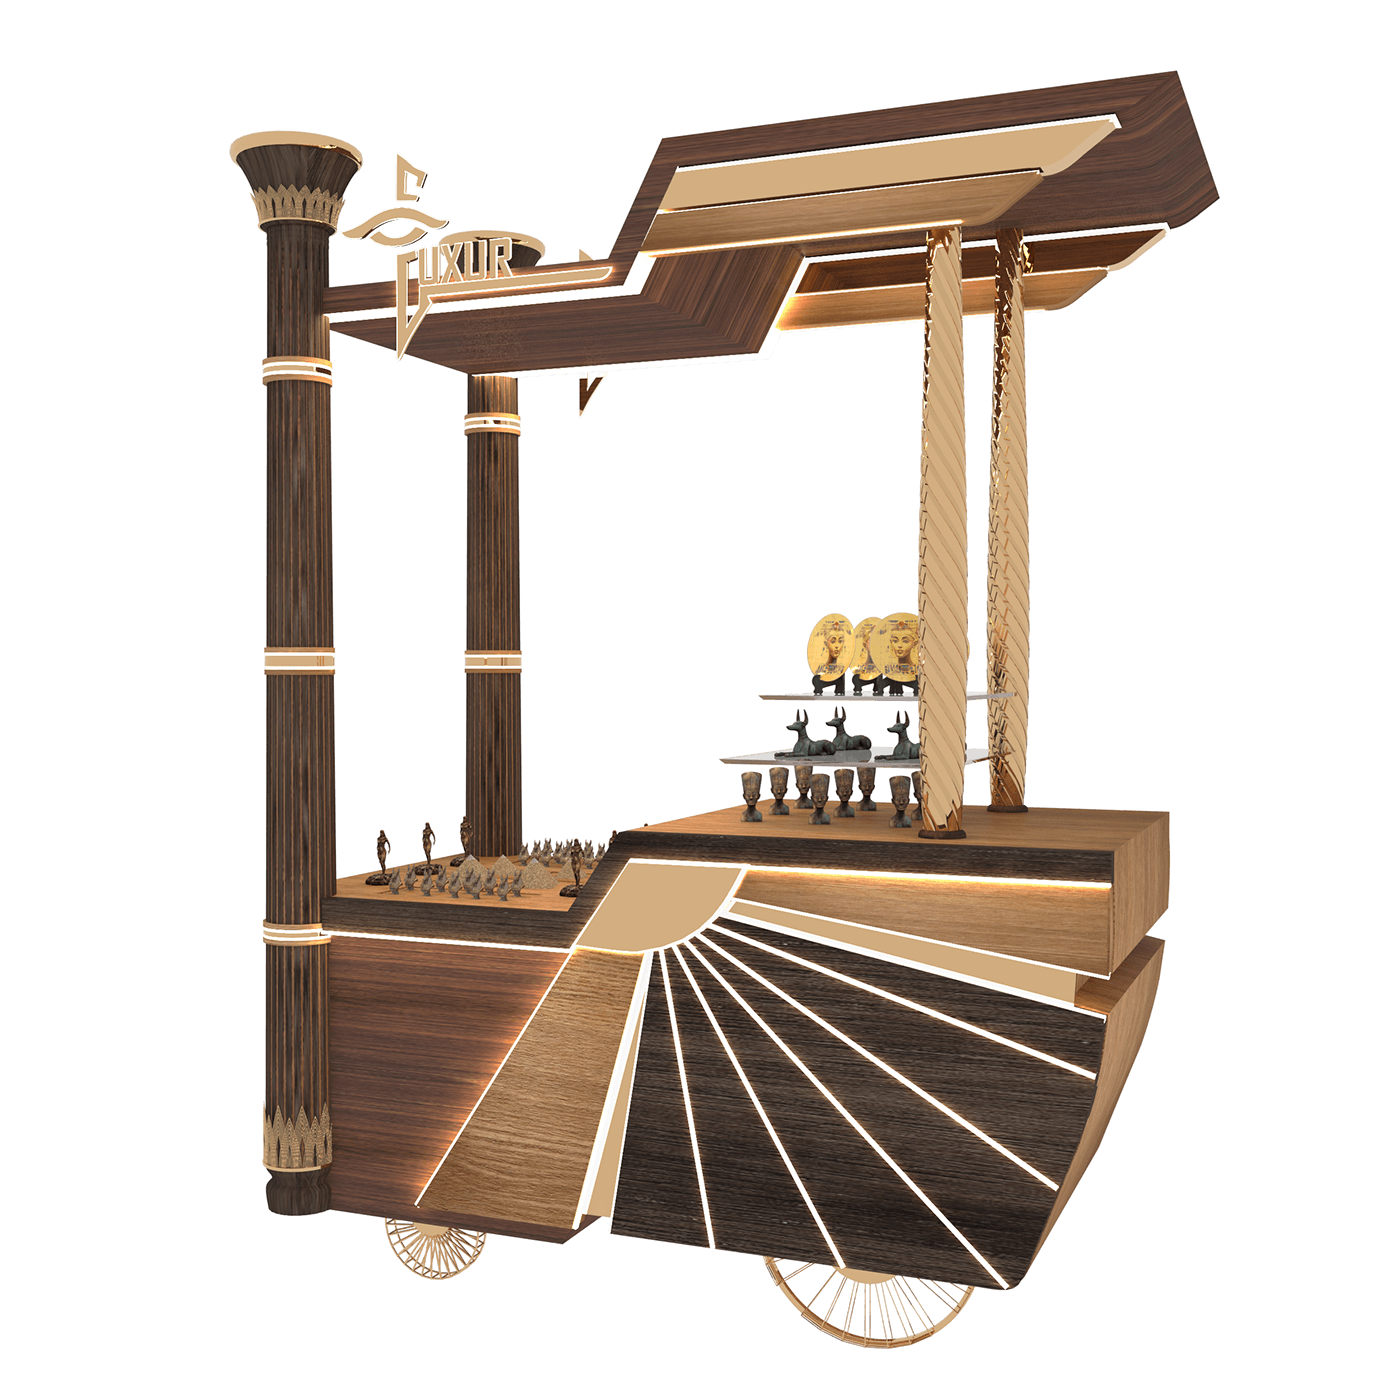 3ds max modern PHARAONIC Luxury Design Pharaonic design Pharaonic civilization vray render vray 3d modeling Cartdesign